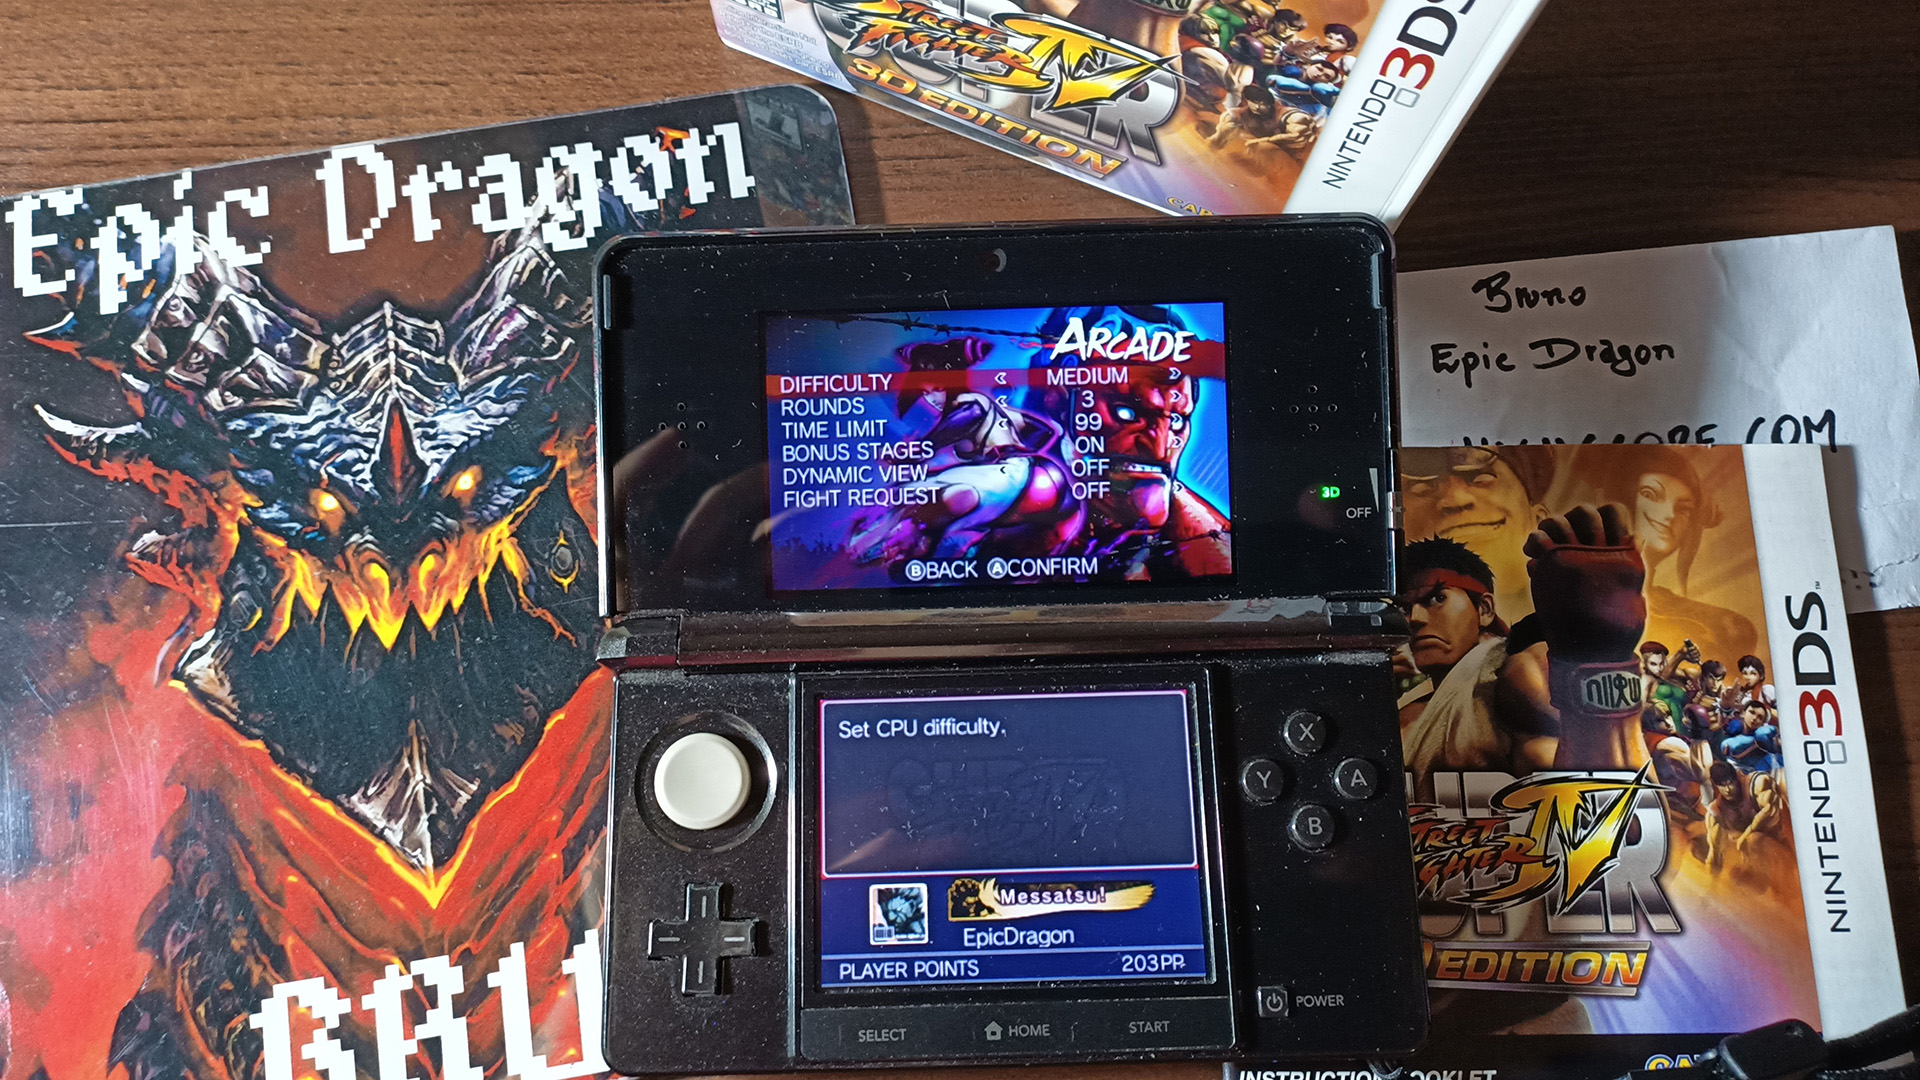 EpicDragon: Super Street Fighter IV 3D Edition: Arcade: Abel (Nintendo 3DS) 491,600 points on 2022-08-01 20:46:44